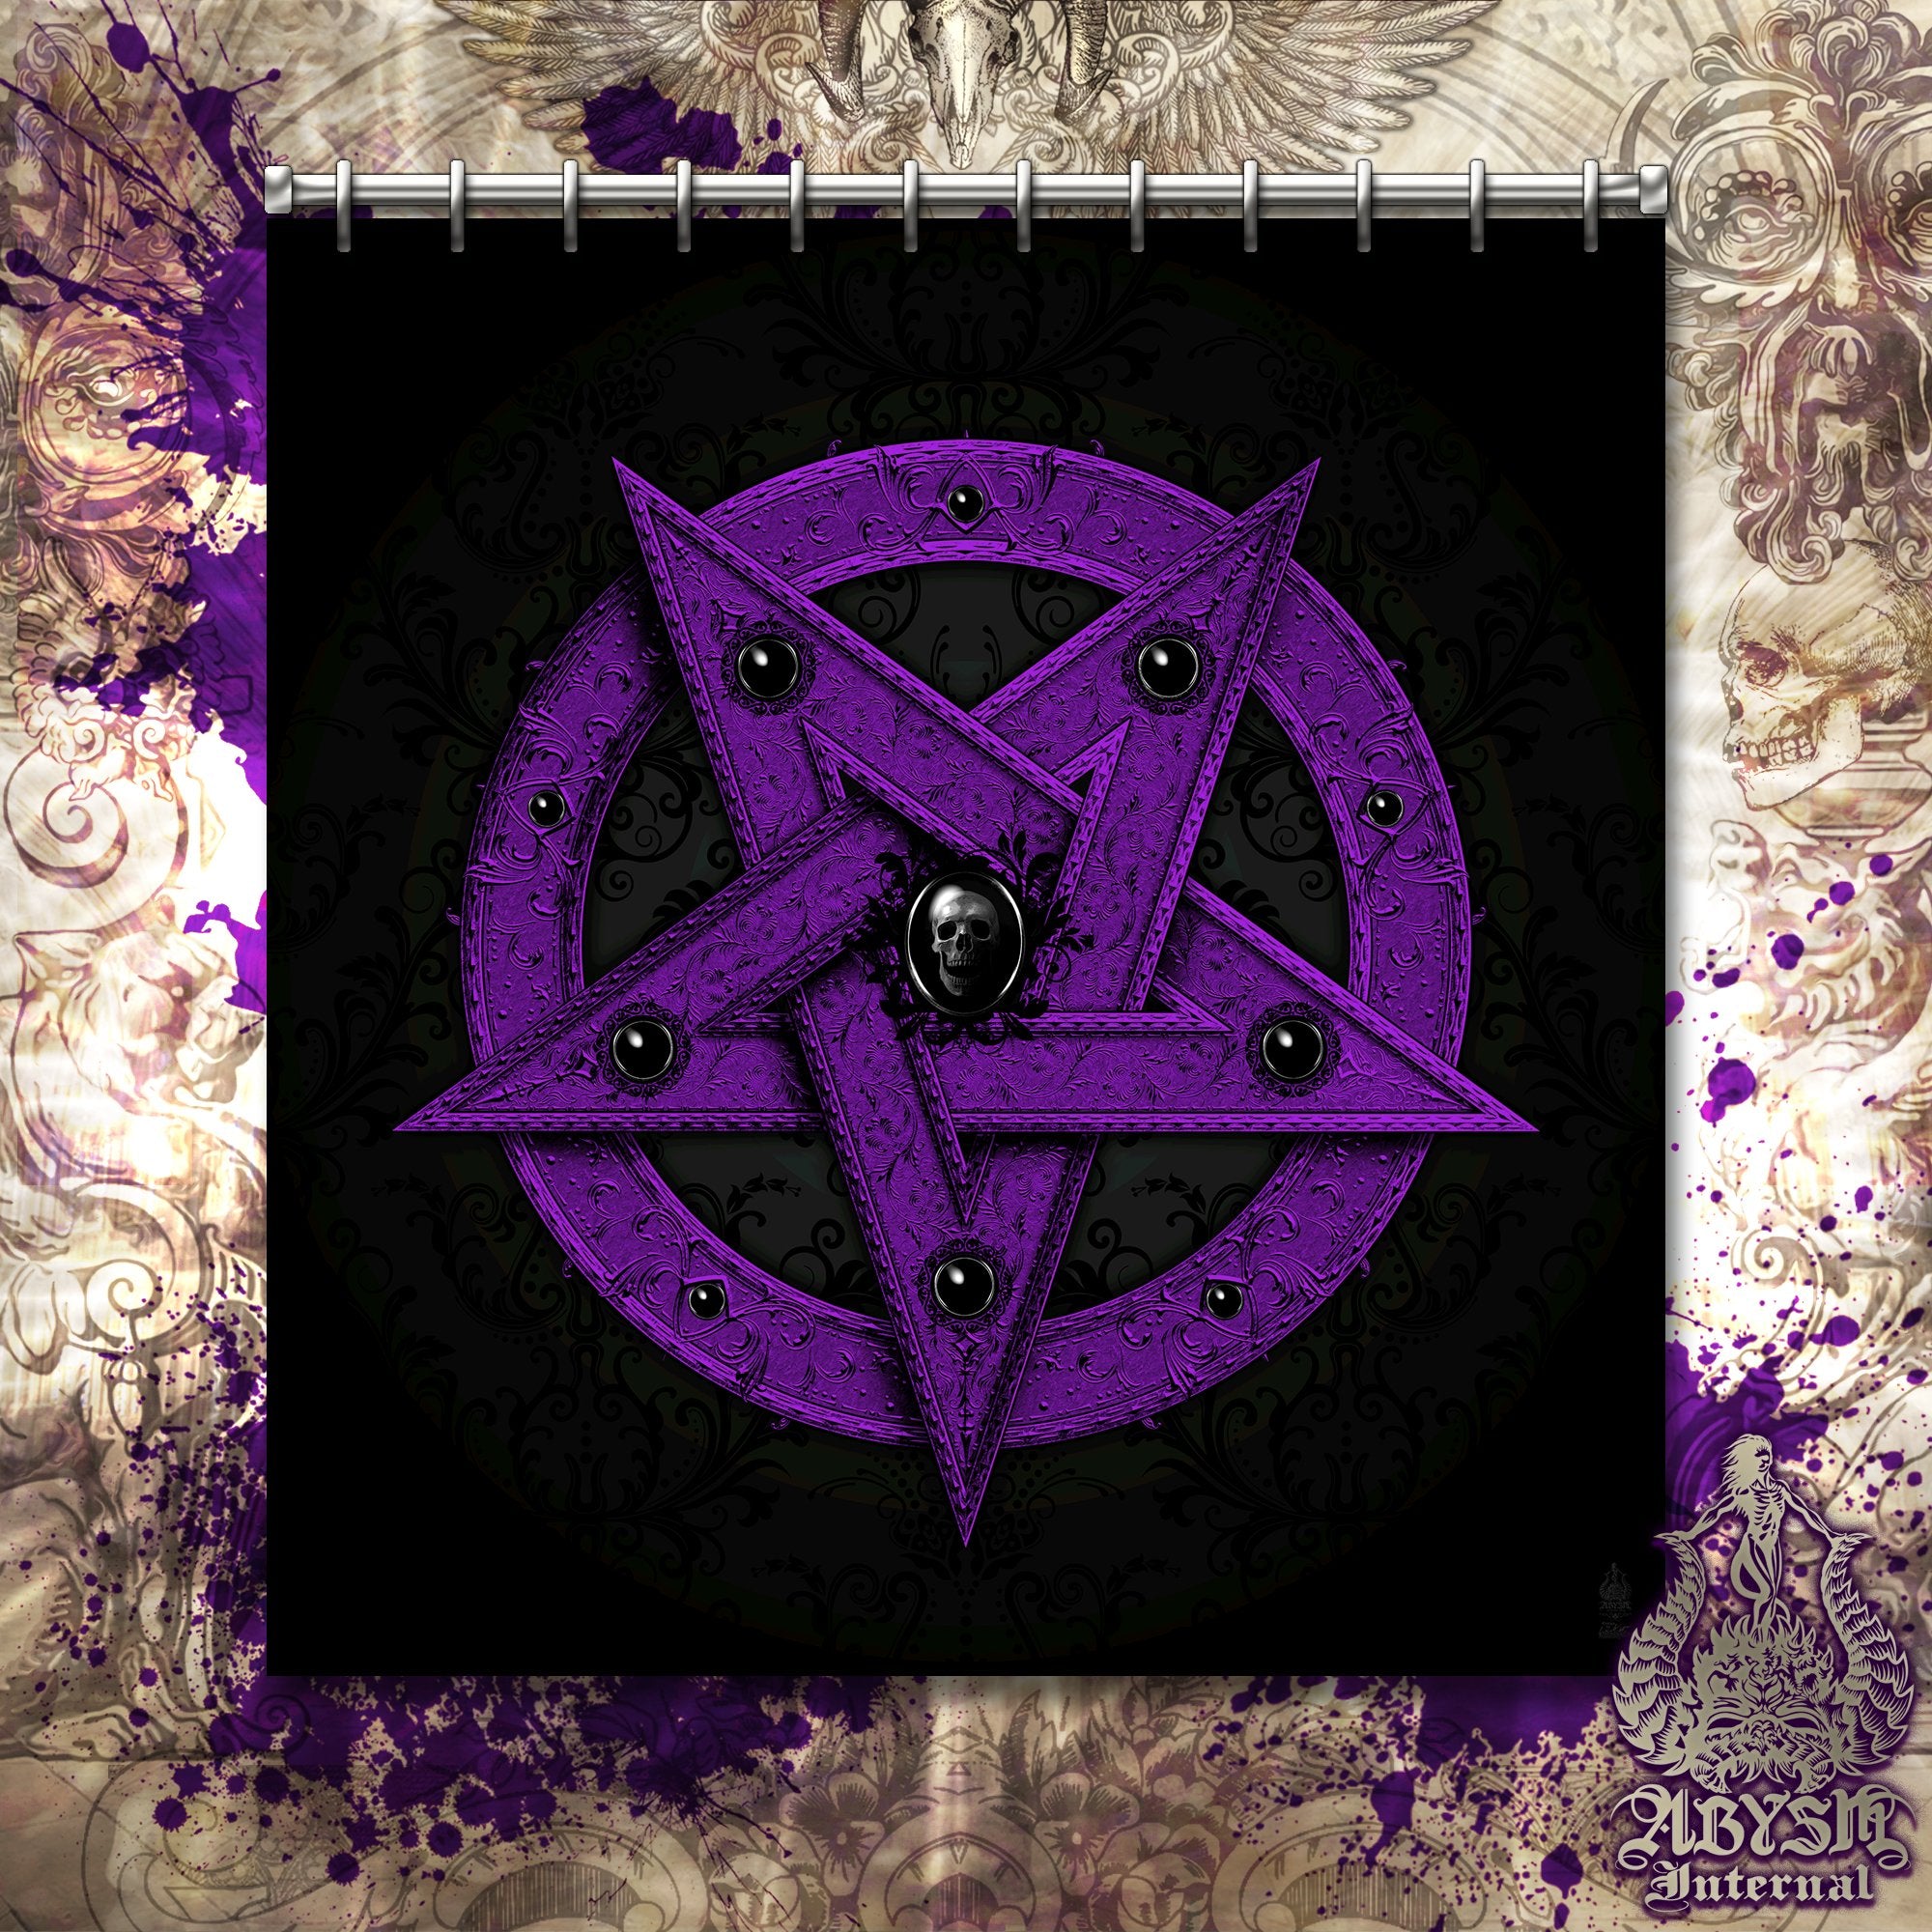 Pastel Goth Pentagram Shower Curtain, 71x74 inches, Whimsigoth Witch Bathroom Decor, Witchy Decor - Black Purple - Abysm Internal